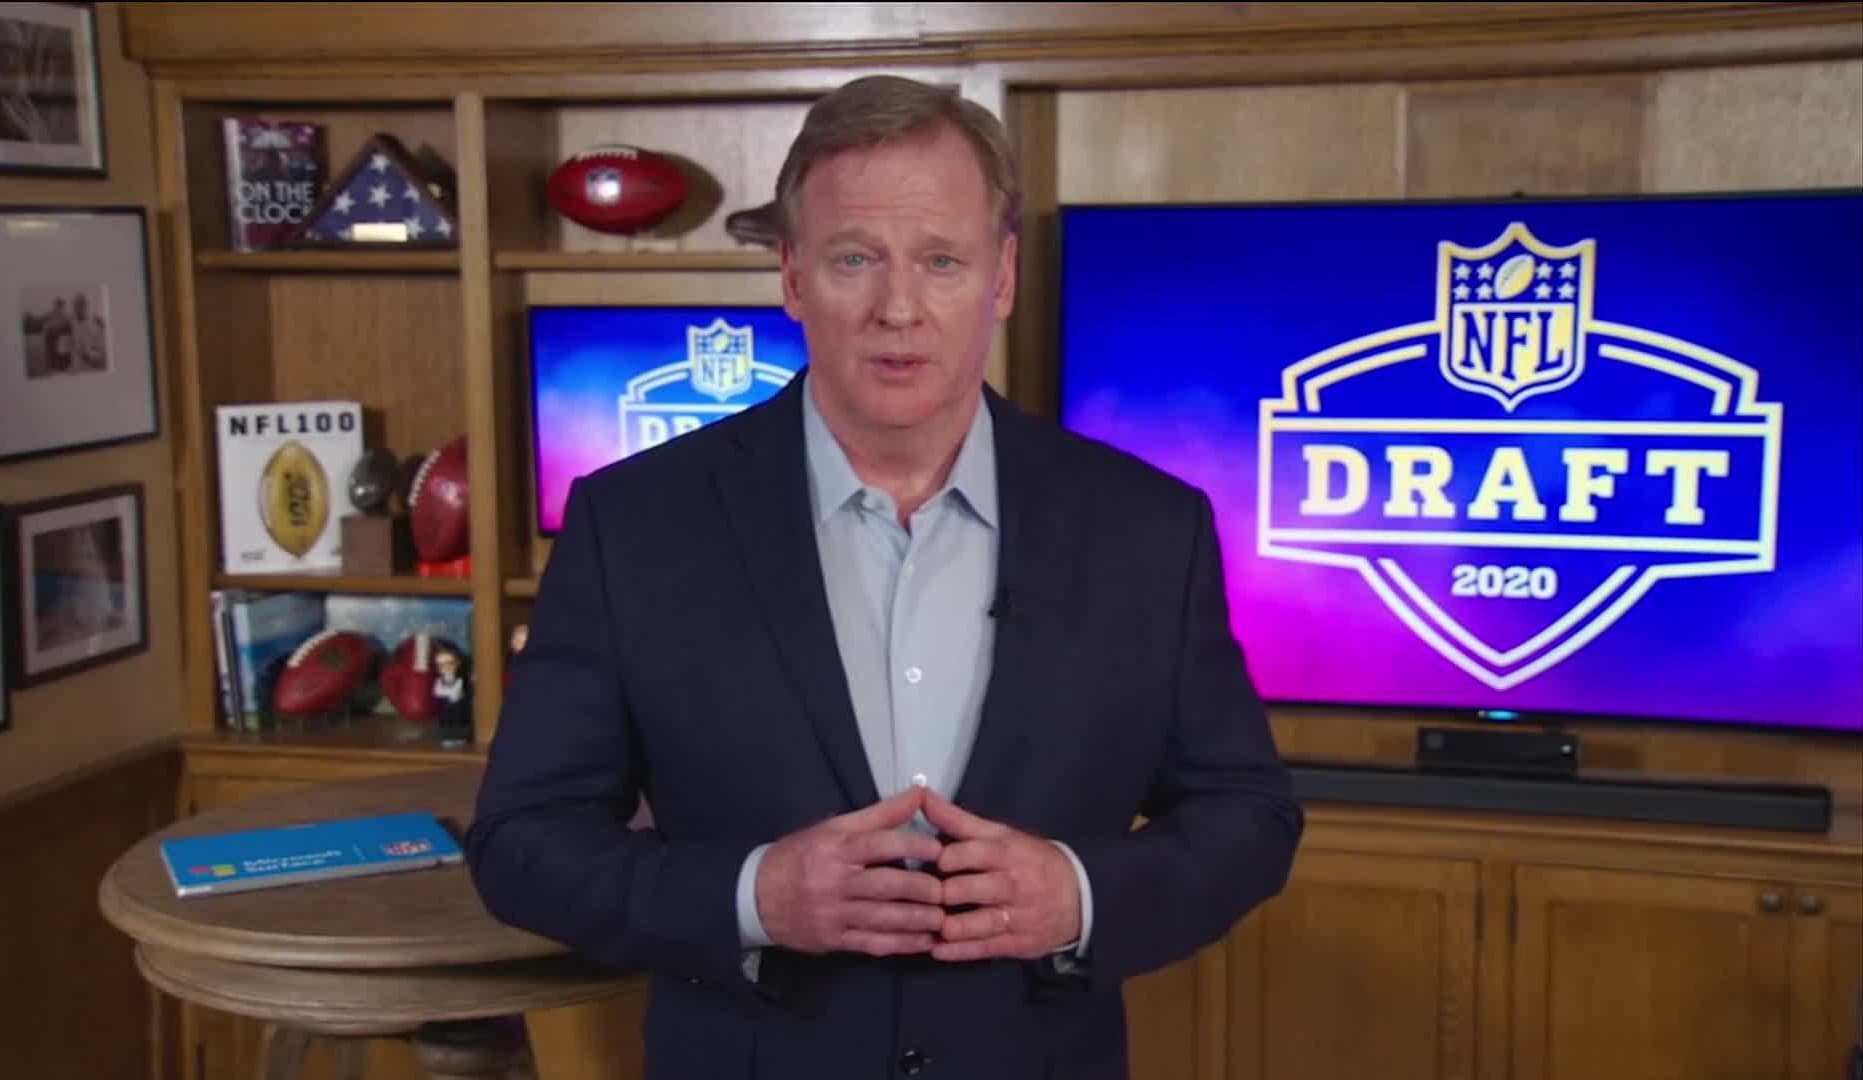 The Walt Disney Company Presents the 2021 NFL Draft - ESPN Press